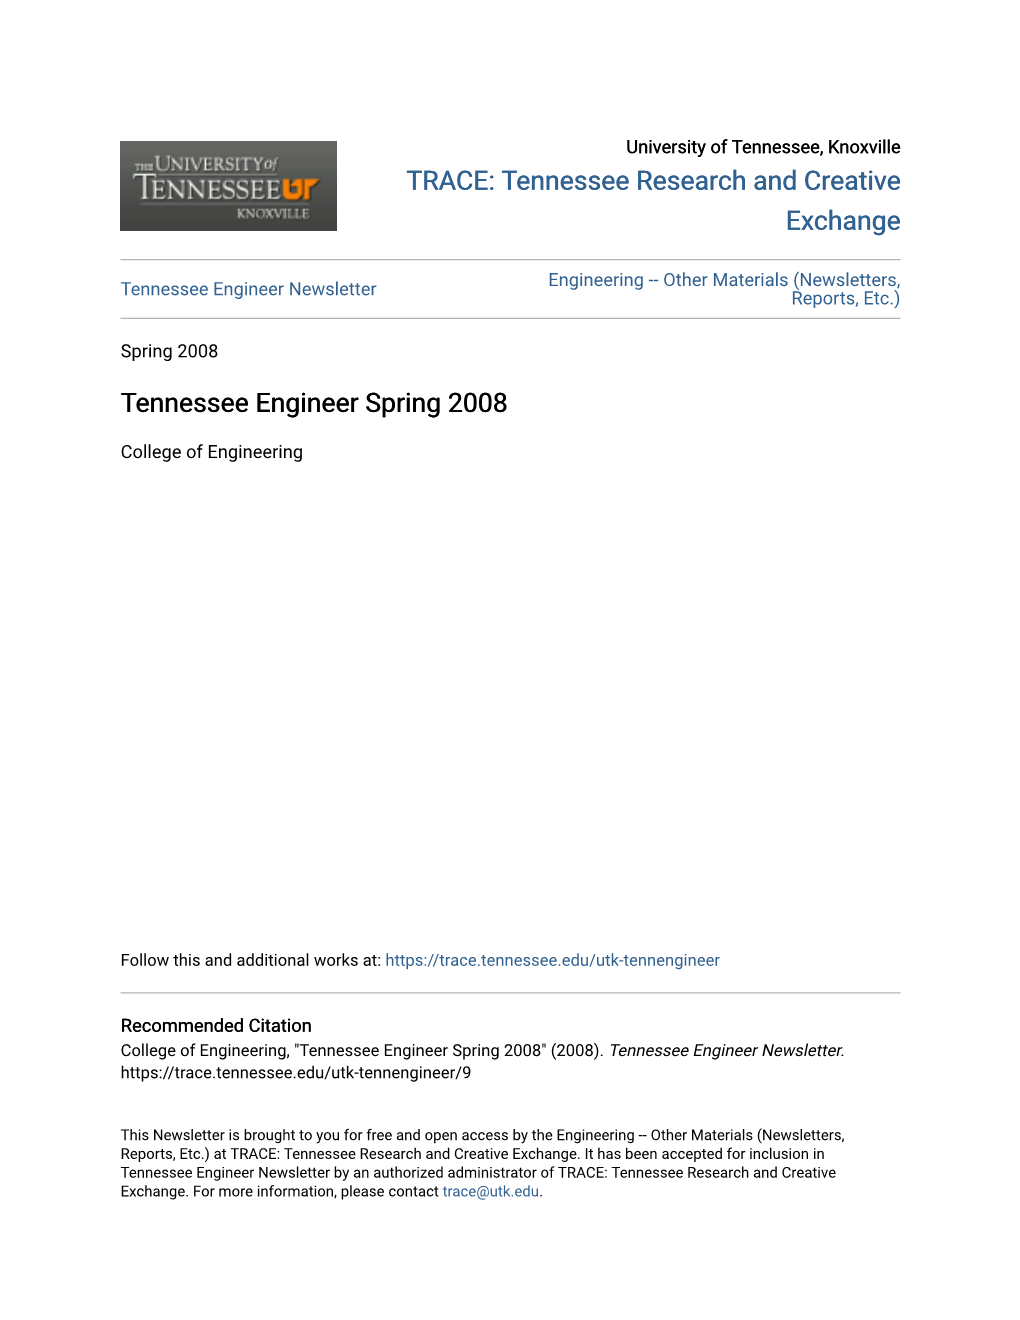 Tennessee Engineer Spring 2008